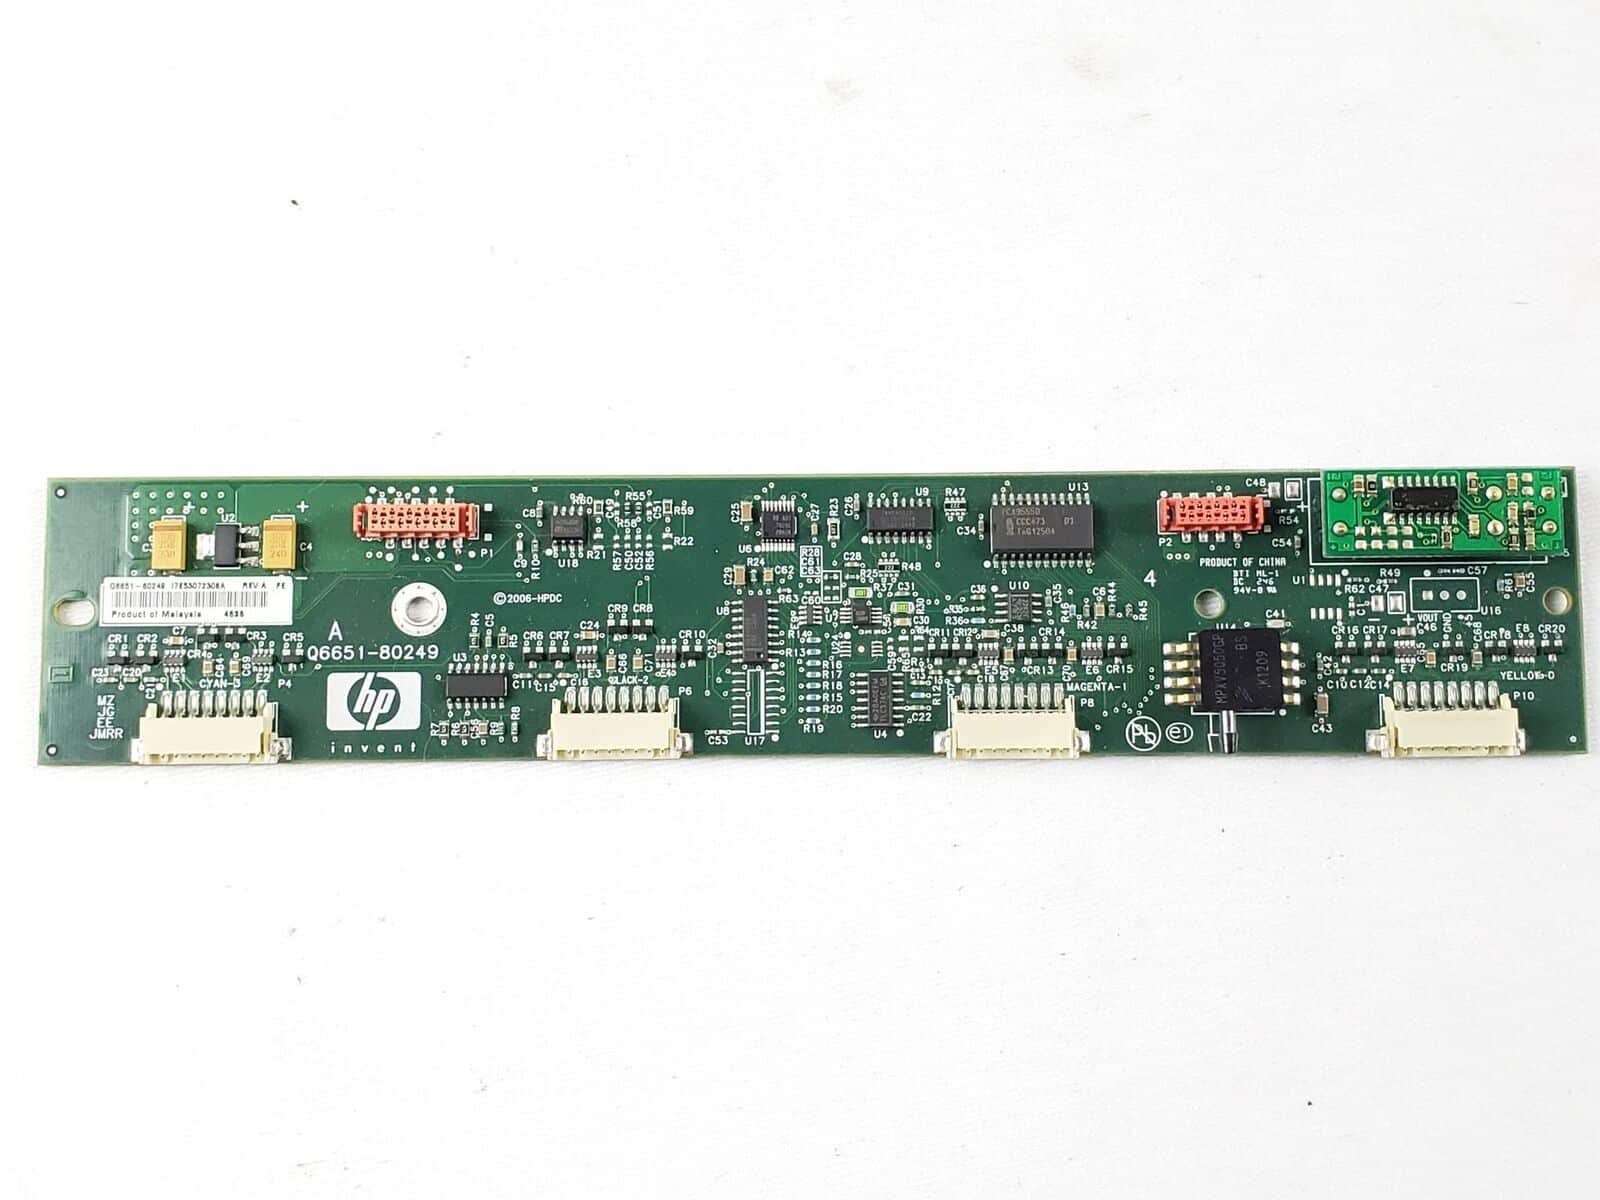 HP DesignJet Q6651-80249 Ink Tube Board